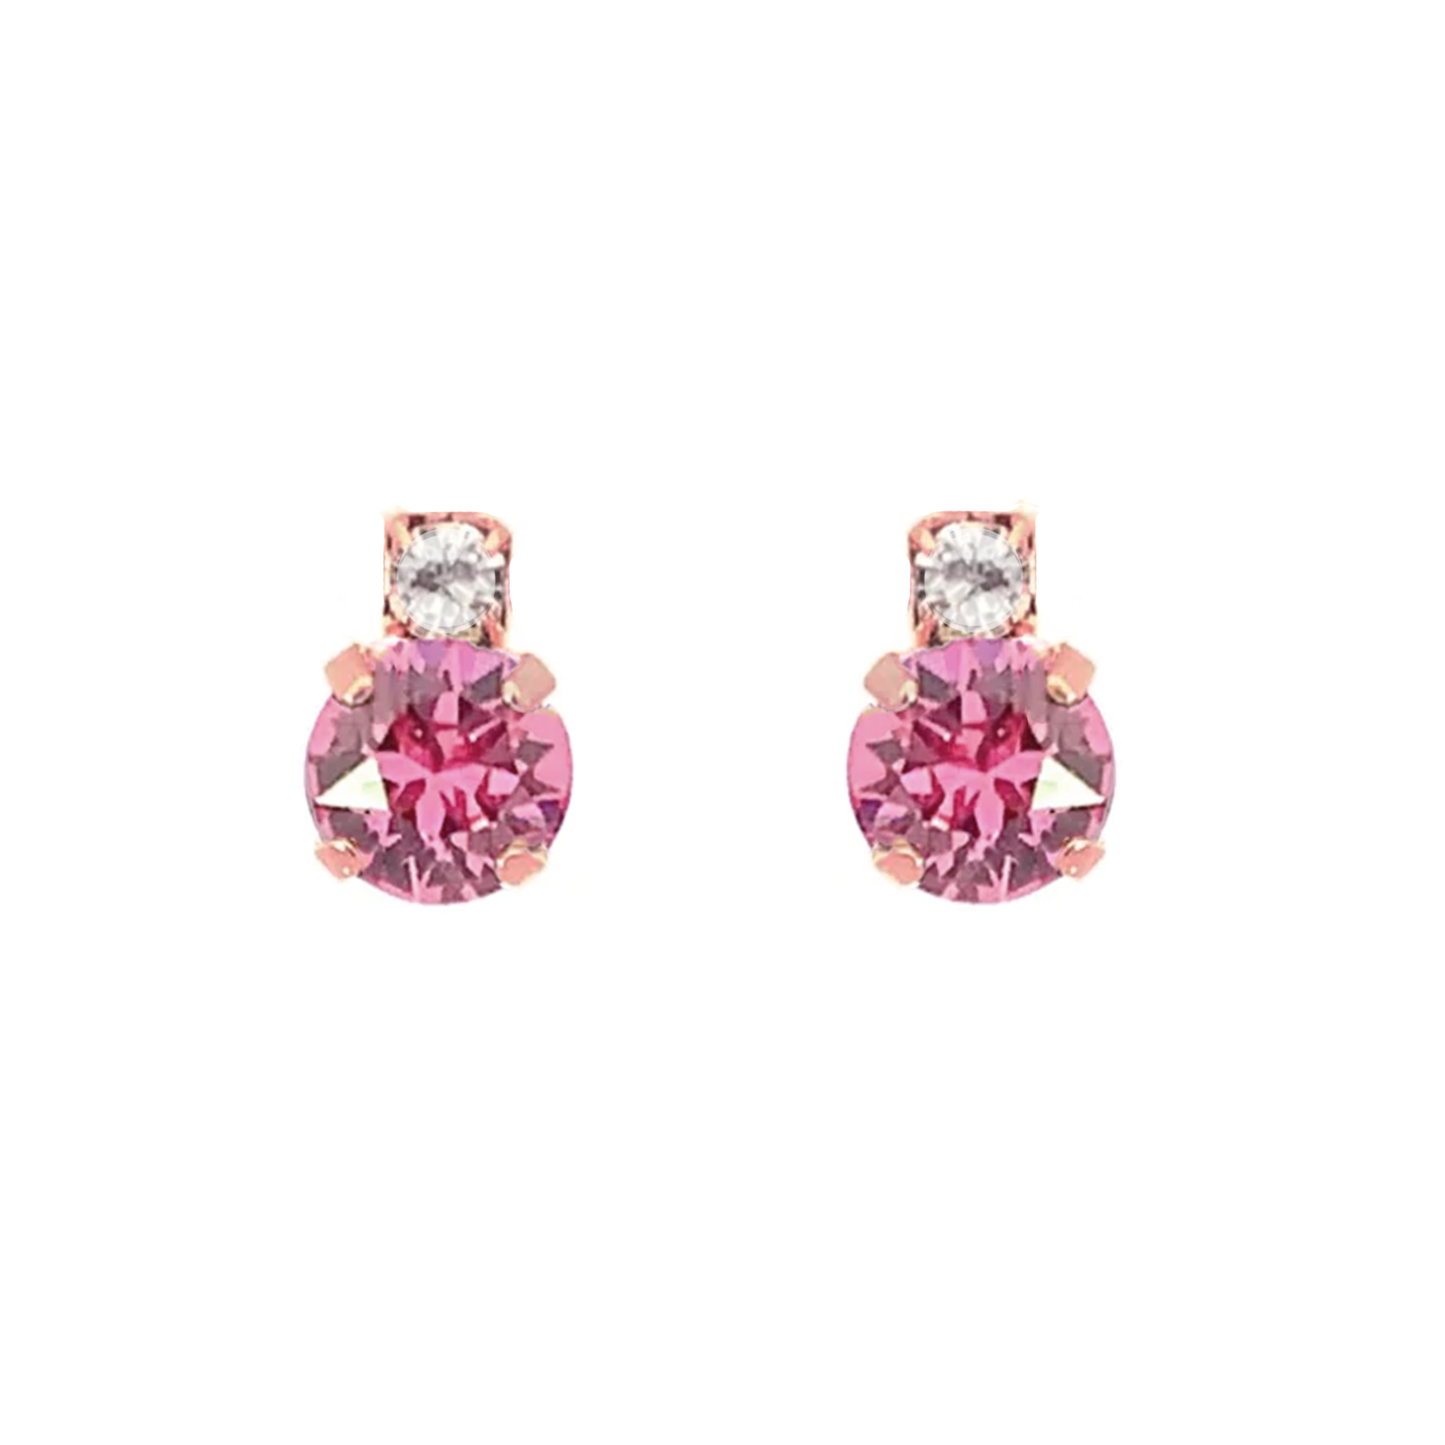 Pink tourmaline stud earrings rose gold